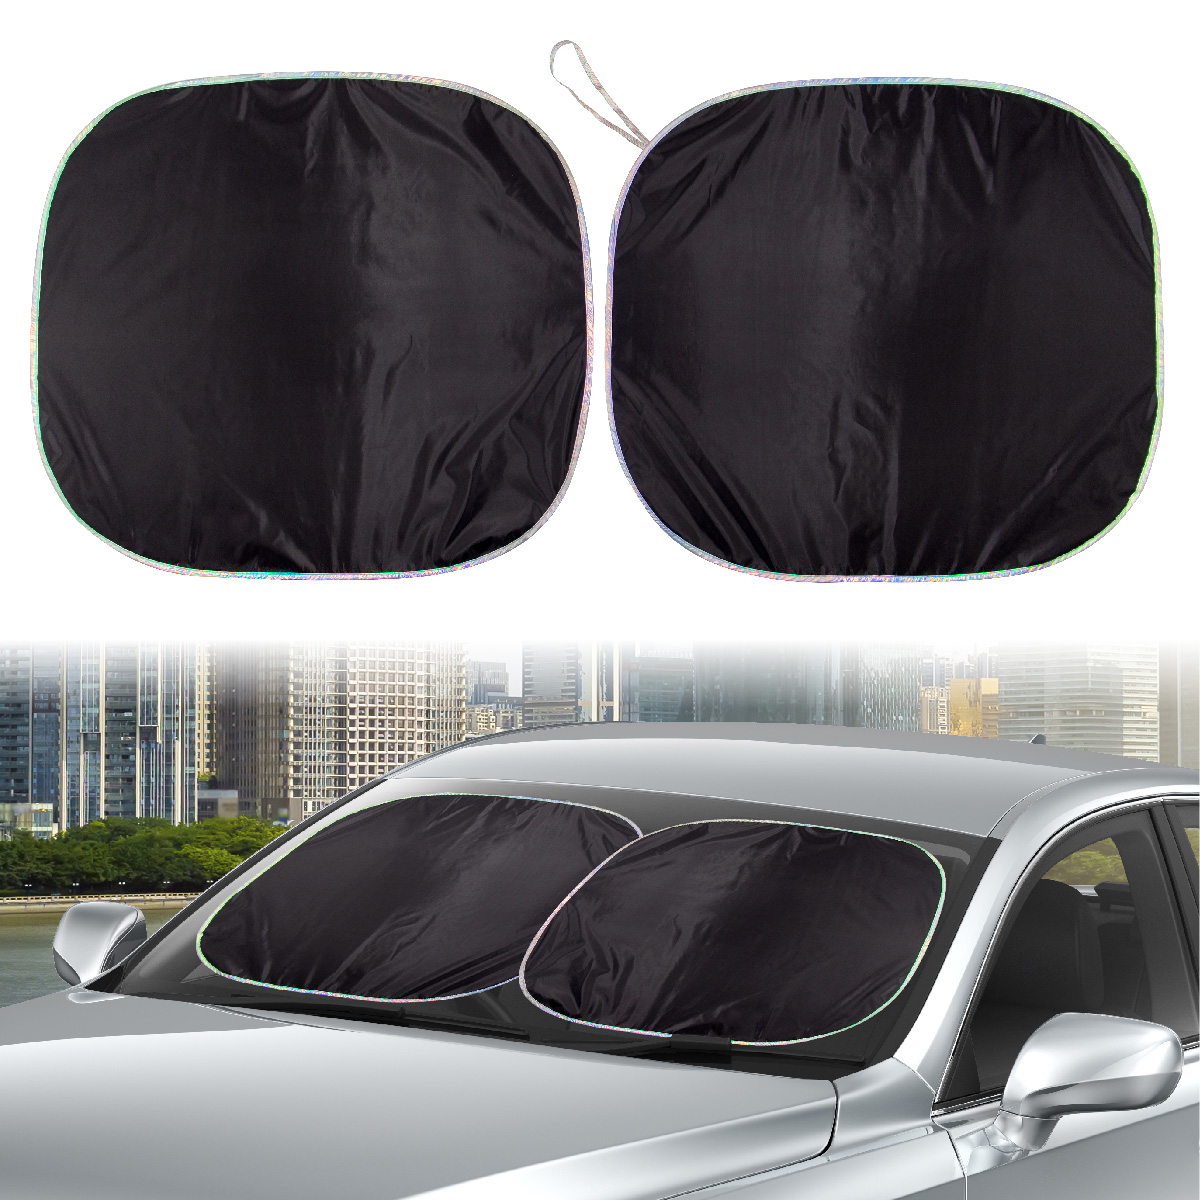 Nice Music Windshield Sun Shade Cover Summer Car Windows Visor Kit Ornament Decor Outdoor Vehicle Interior Accessories Sunshade Auto for Women Men 